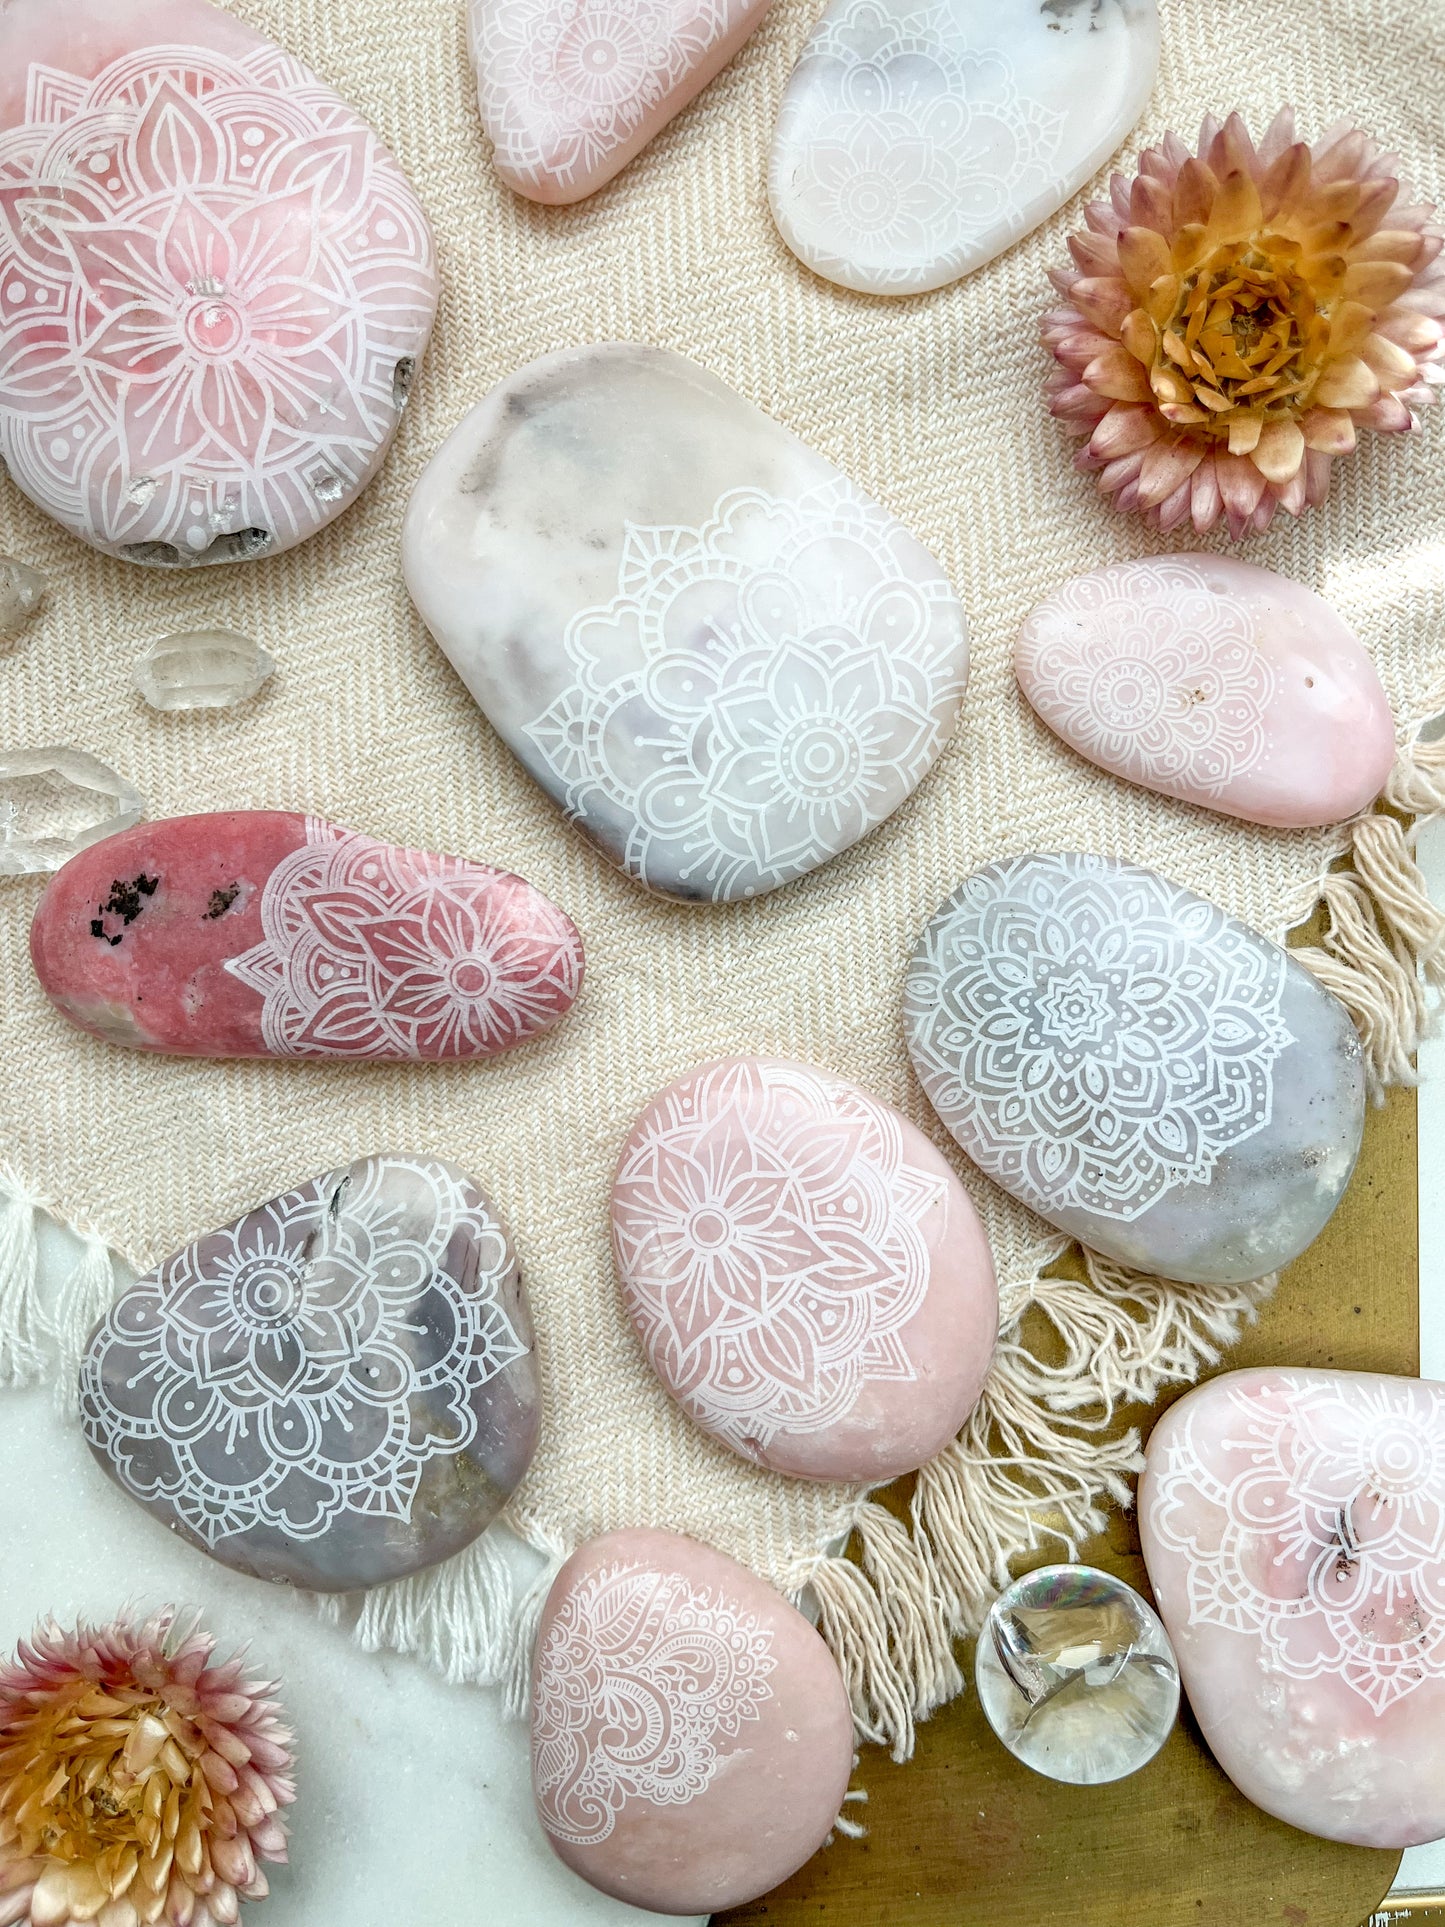 Heart Healing Pink Opal Palmstone Etched with Mandala